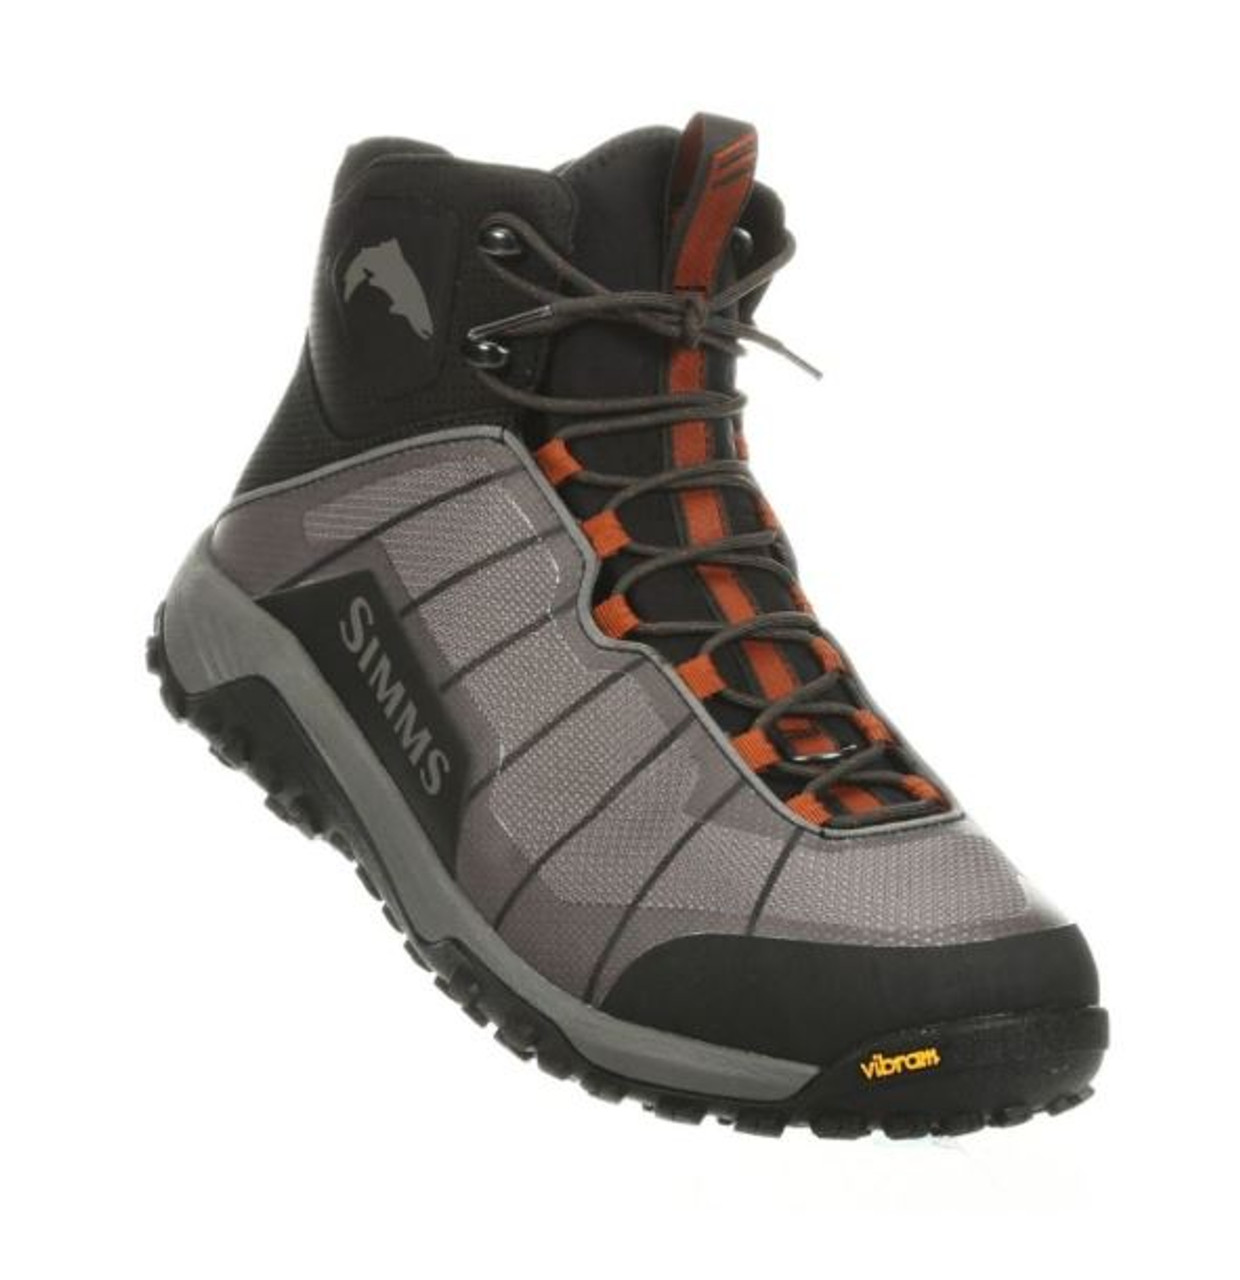 Flyweight Wading Boot - Vibram Sole (Size 12) - Steel Grey - Ramsey Outdoor